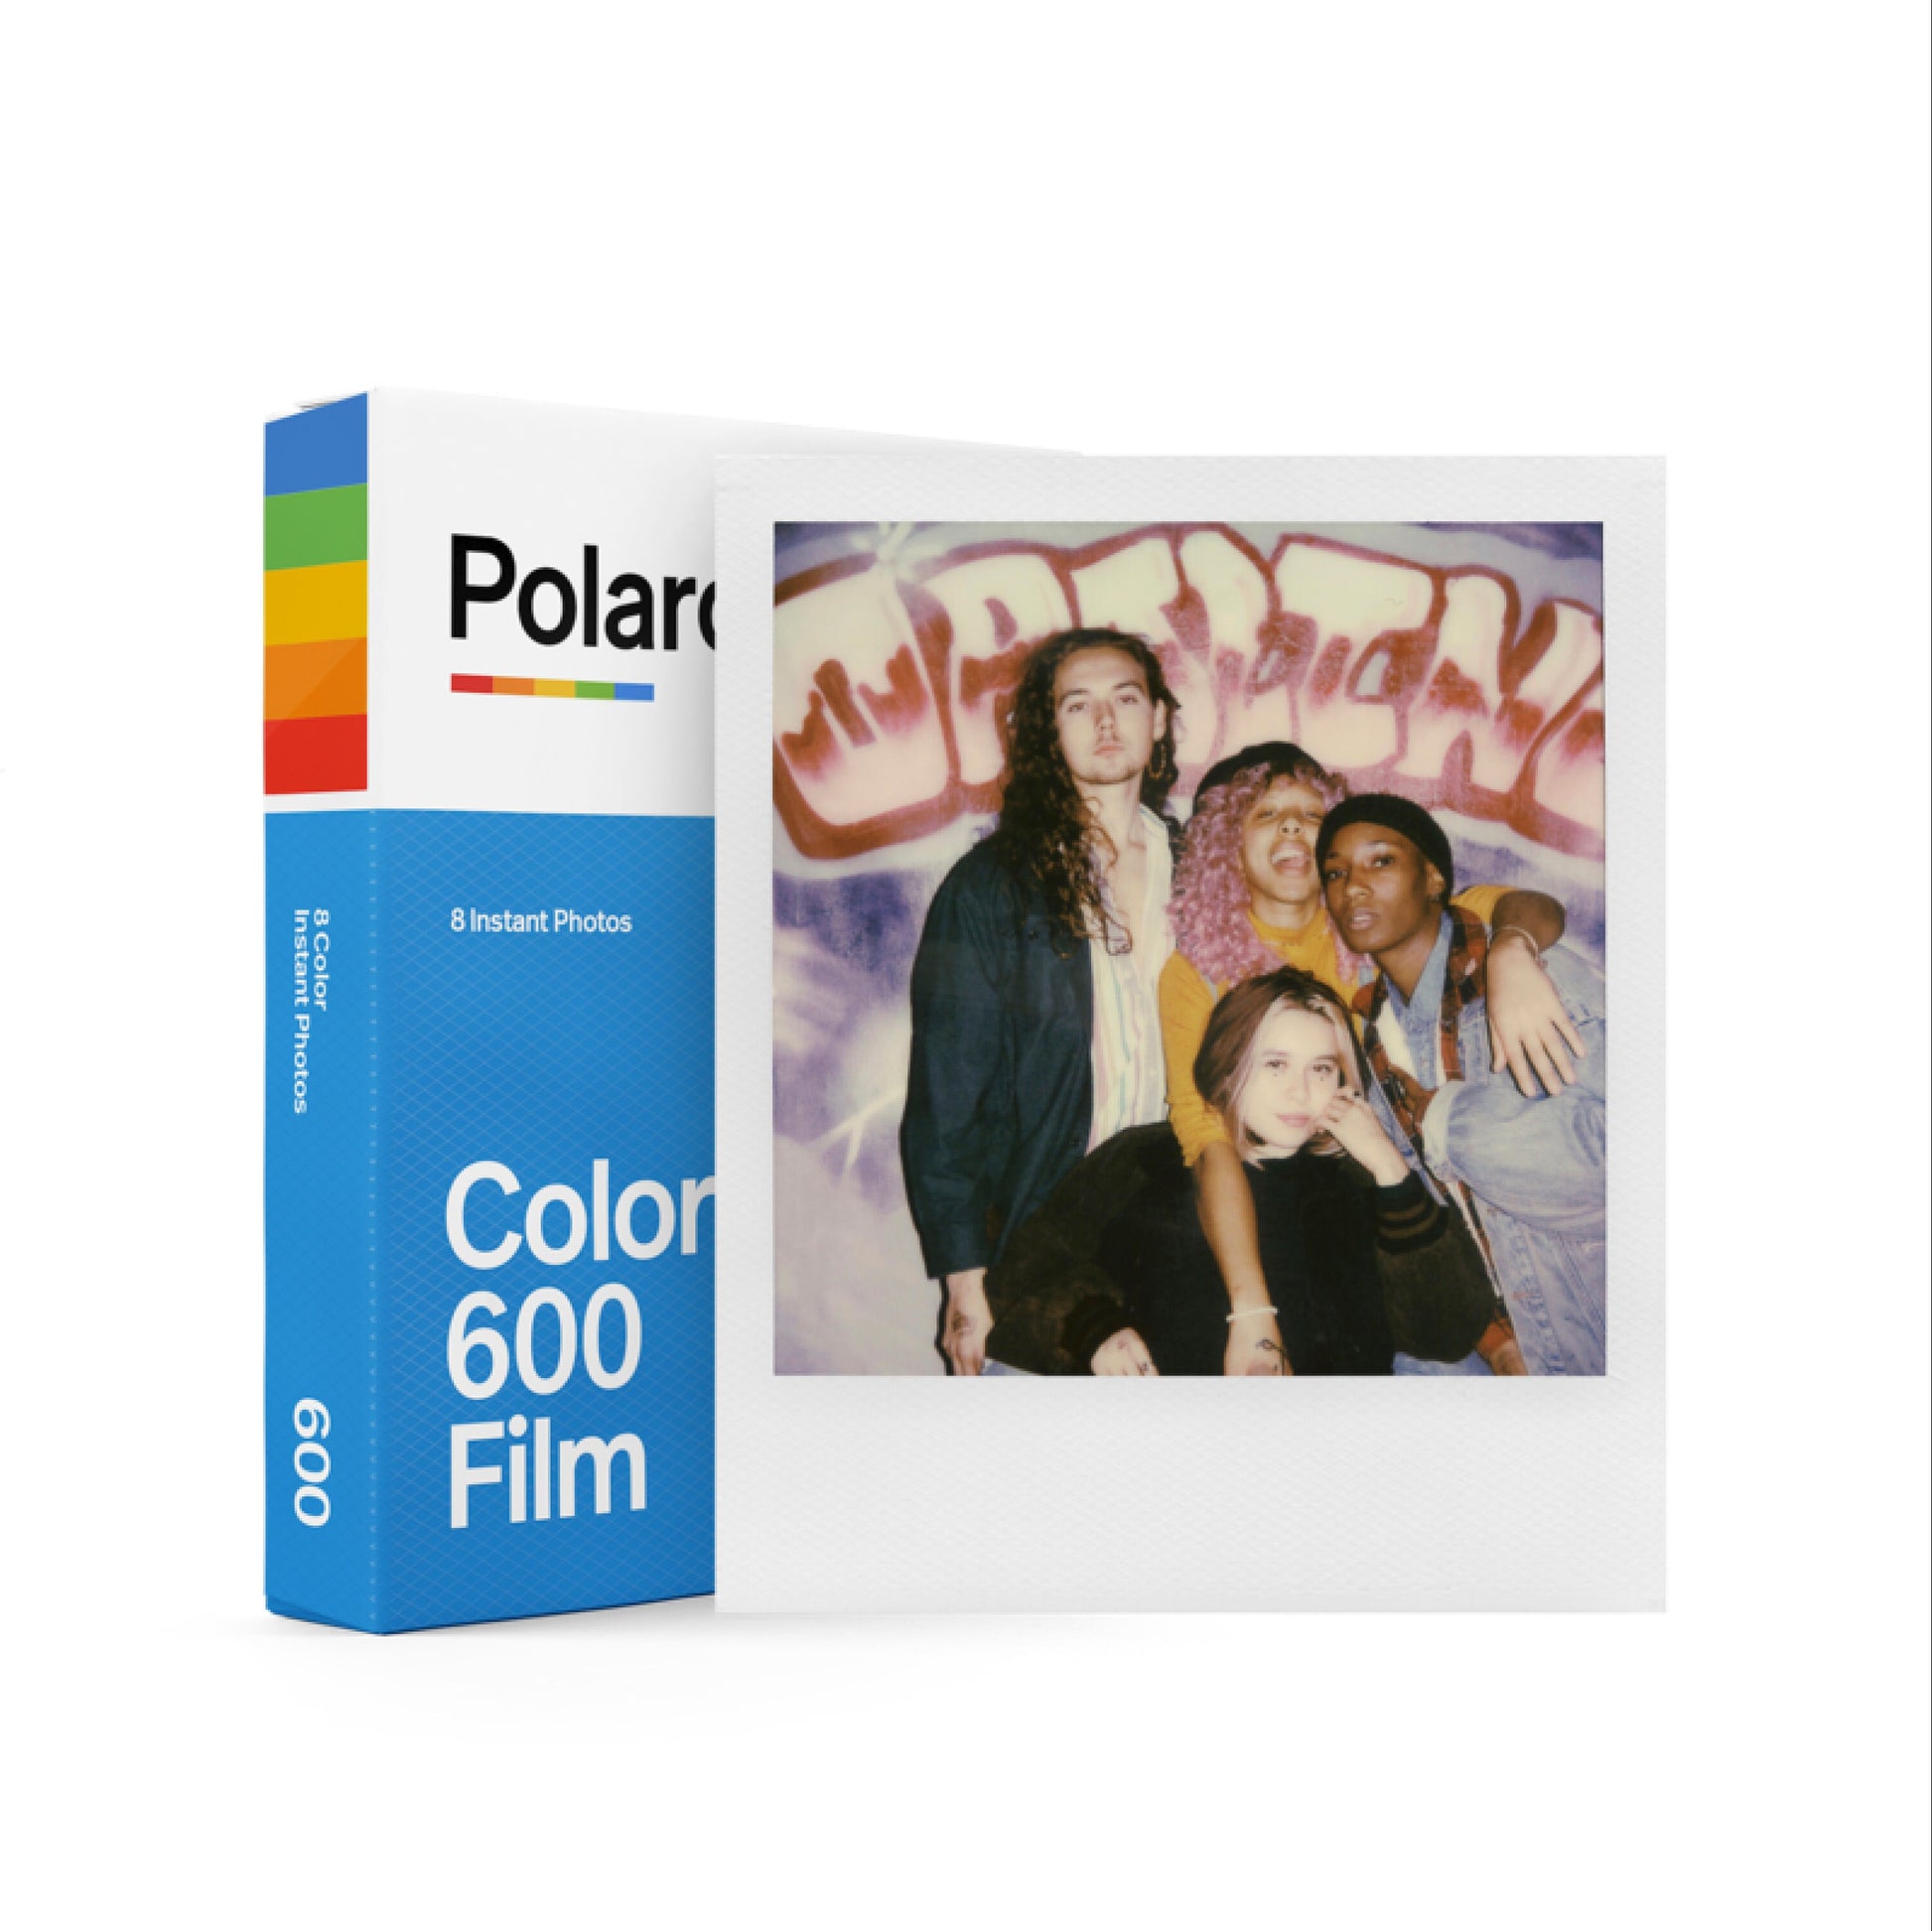 Polaroid One 600  Film Camera Blue POLAROID TYPE CAMERA - point and shoot - Film tested - Vintage Polaroid Instant Cameras